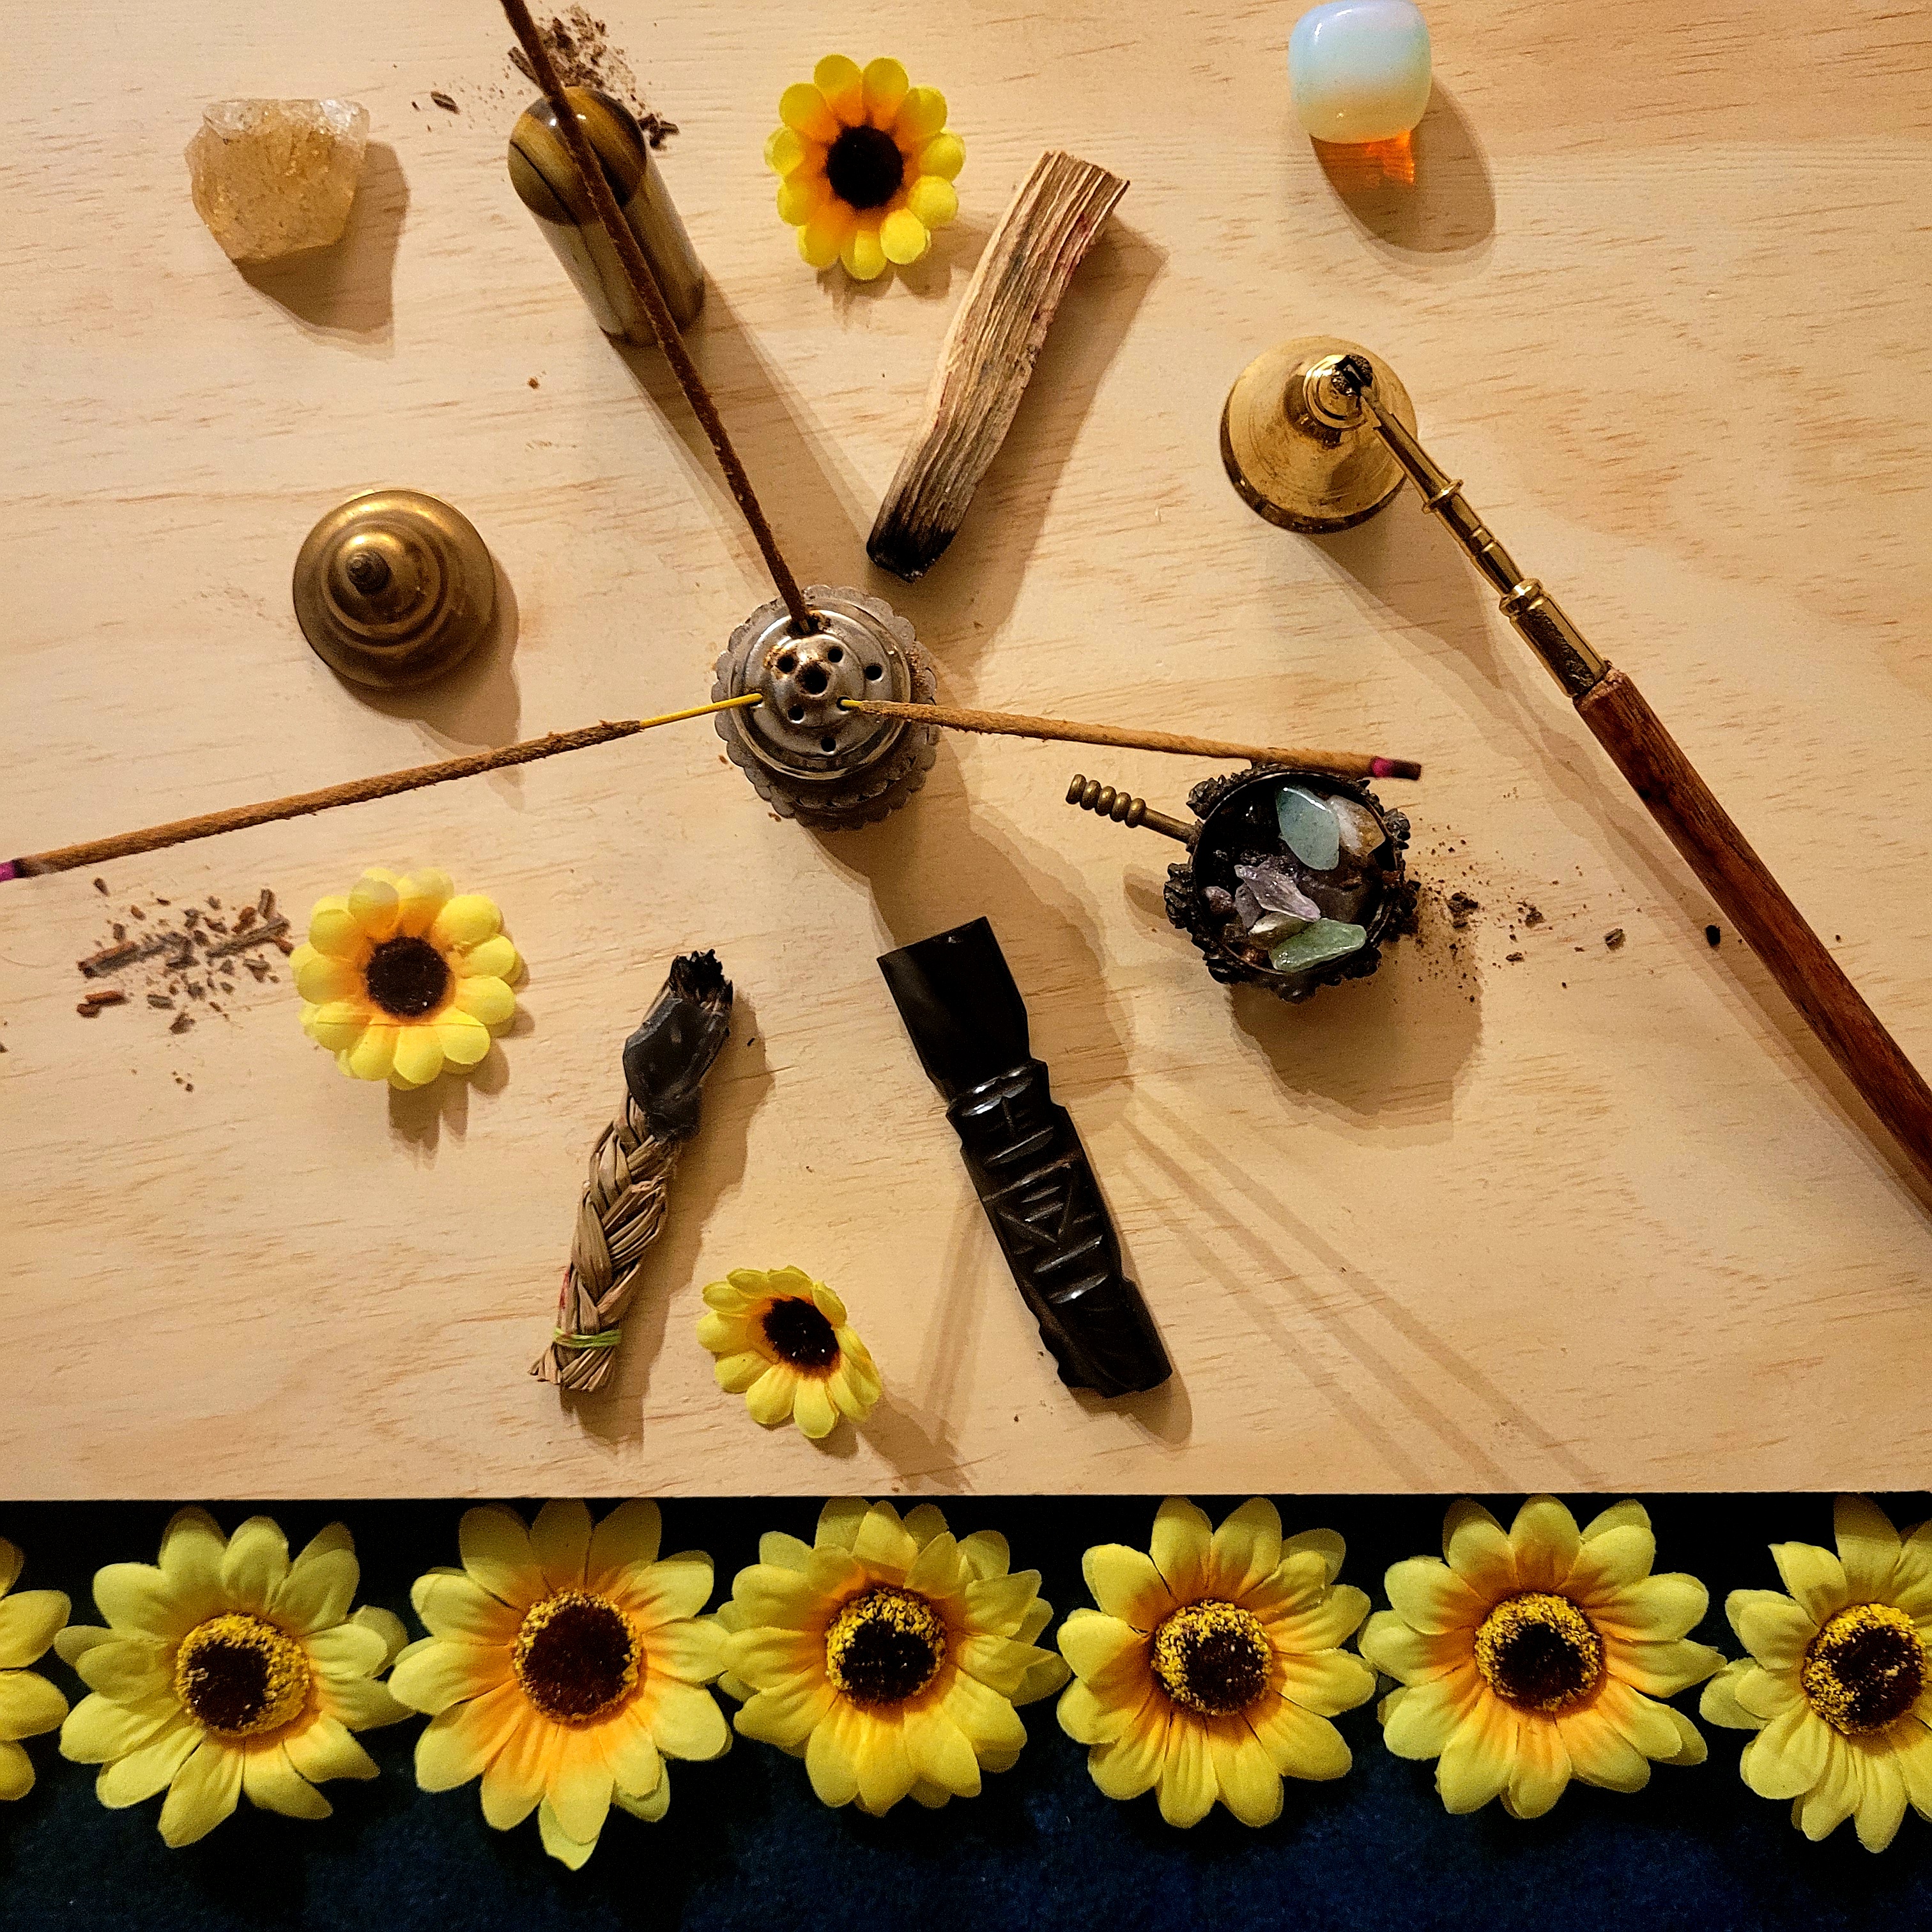 The Sunflower - Finding Center